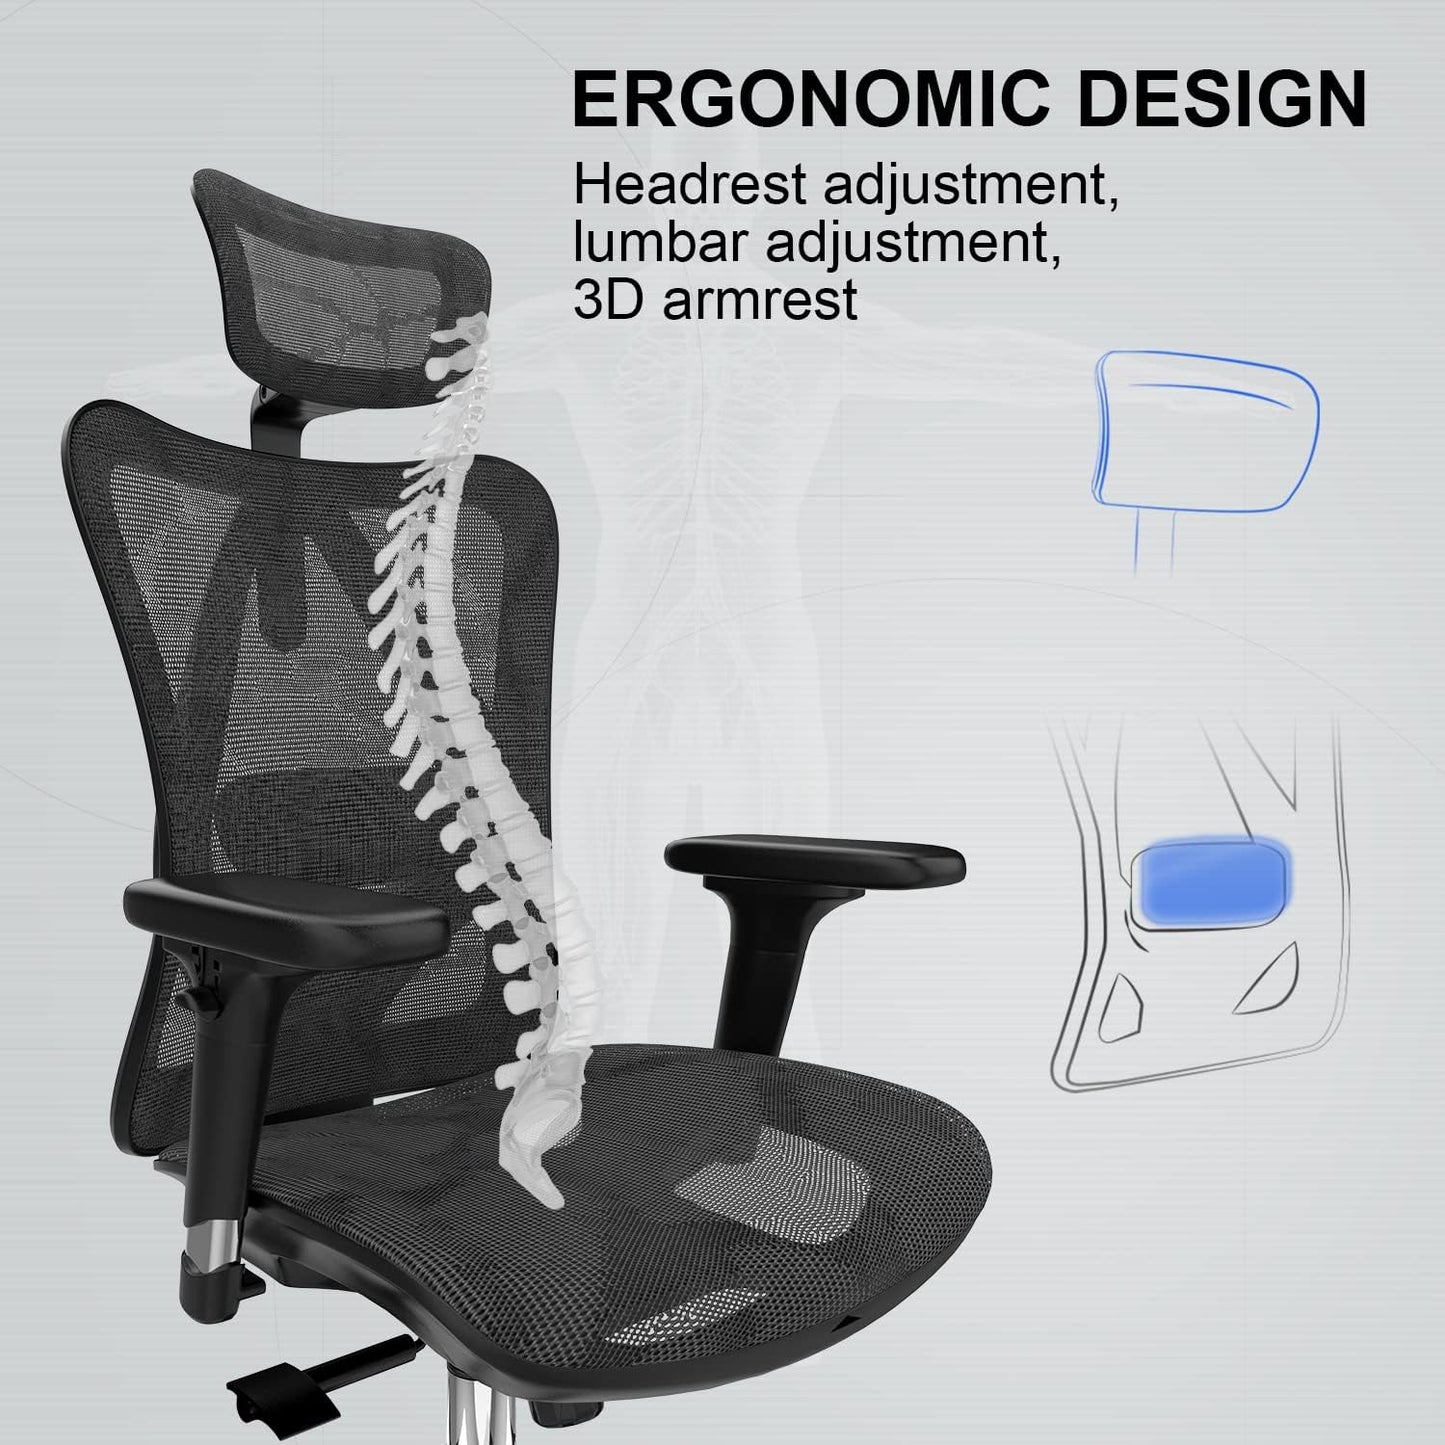 Sihoo M57 Ergonomic Chair With Legrest